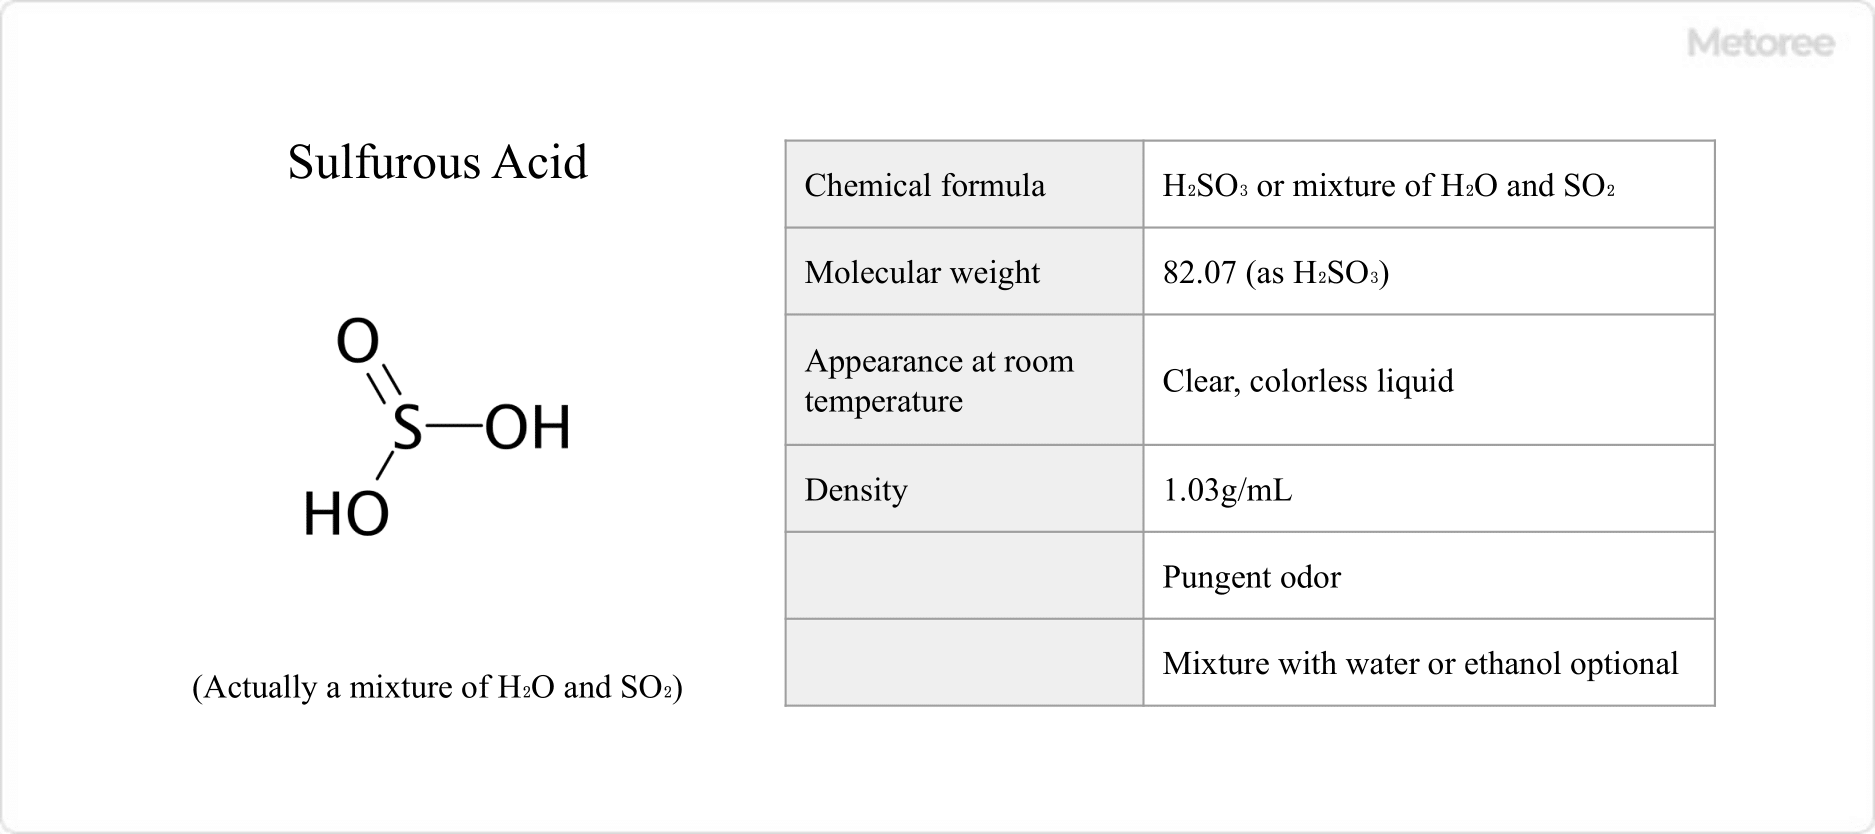 Figure 1. Basic Information on Sulfurous Acid